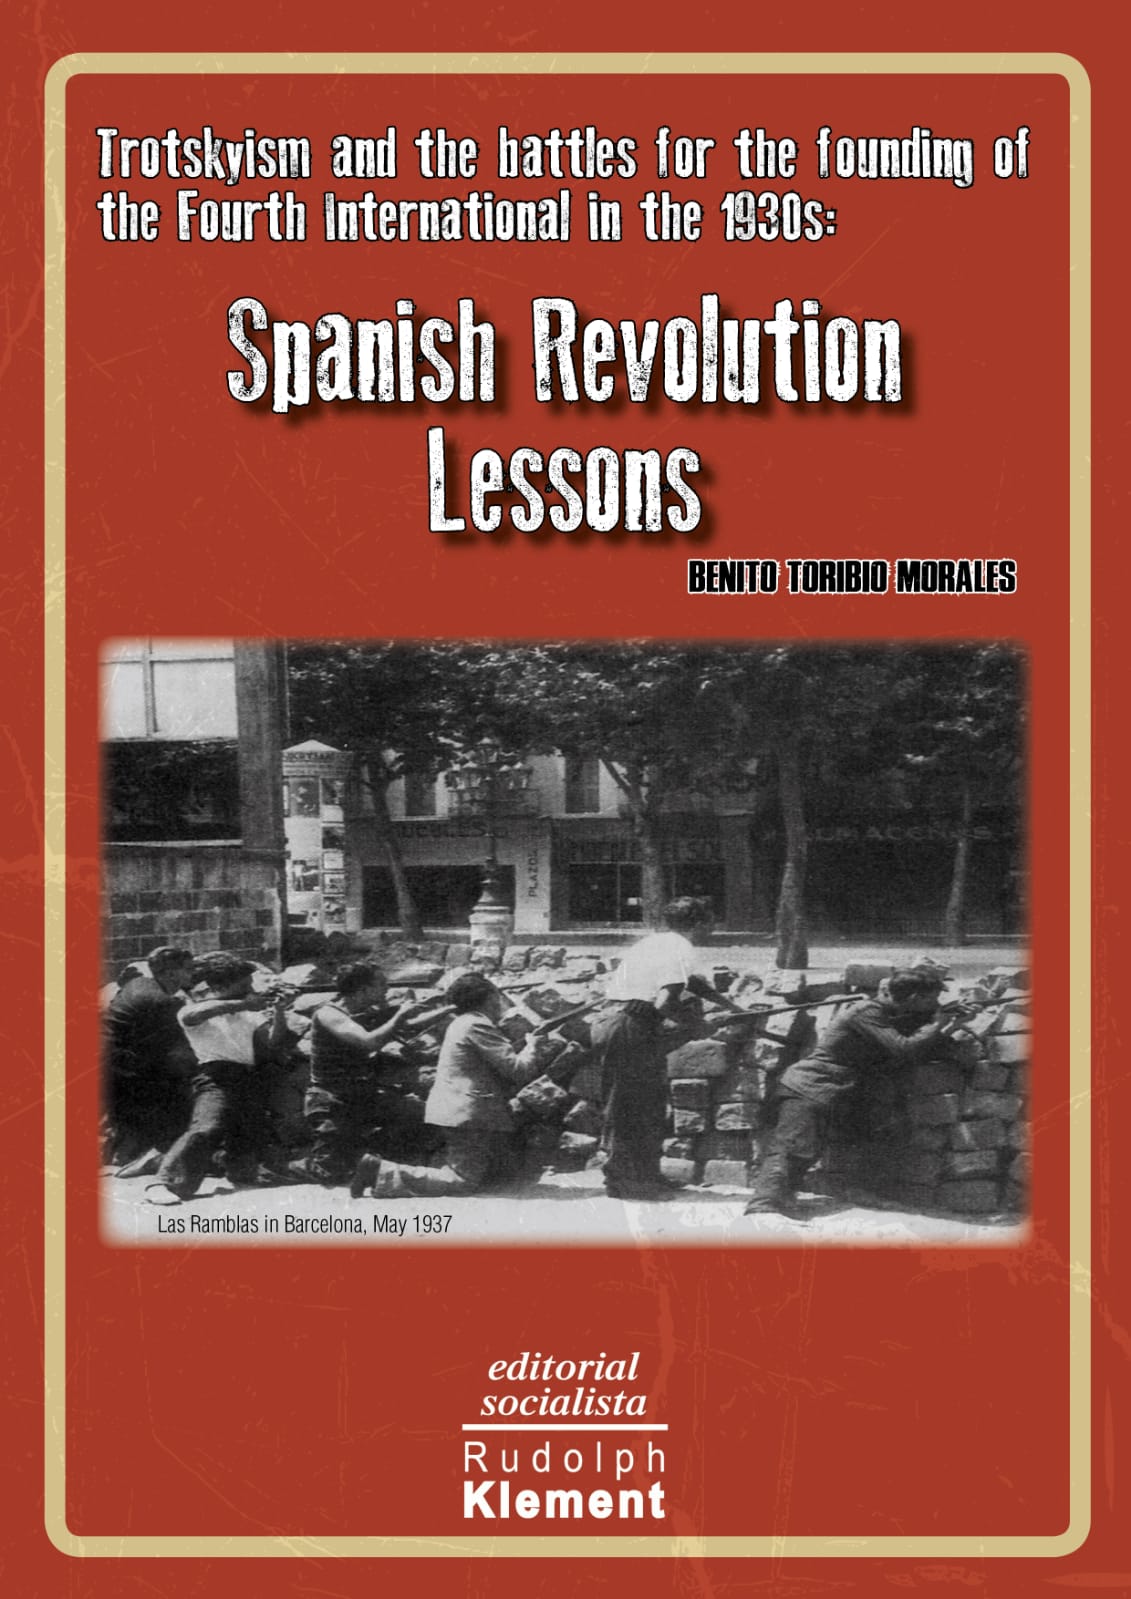 image-spanish-revolution-lessons